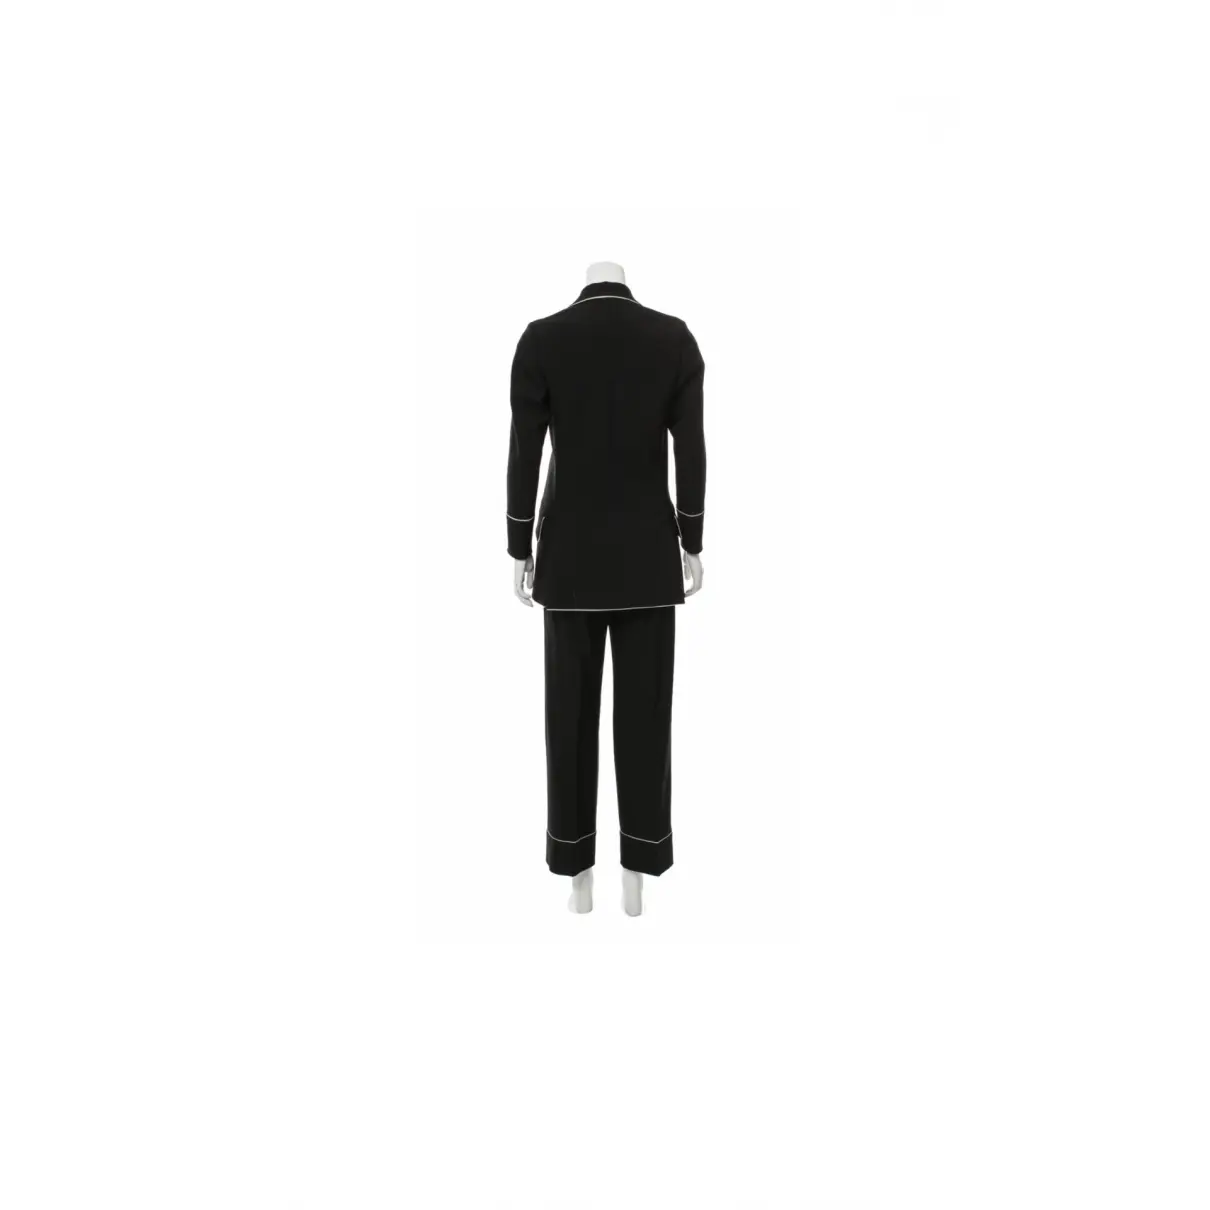 Buy Gucci Wool suit jacket online